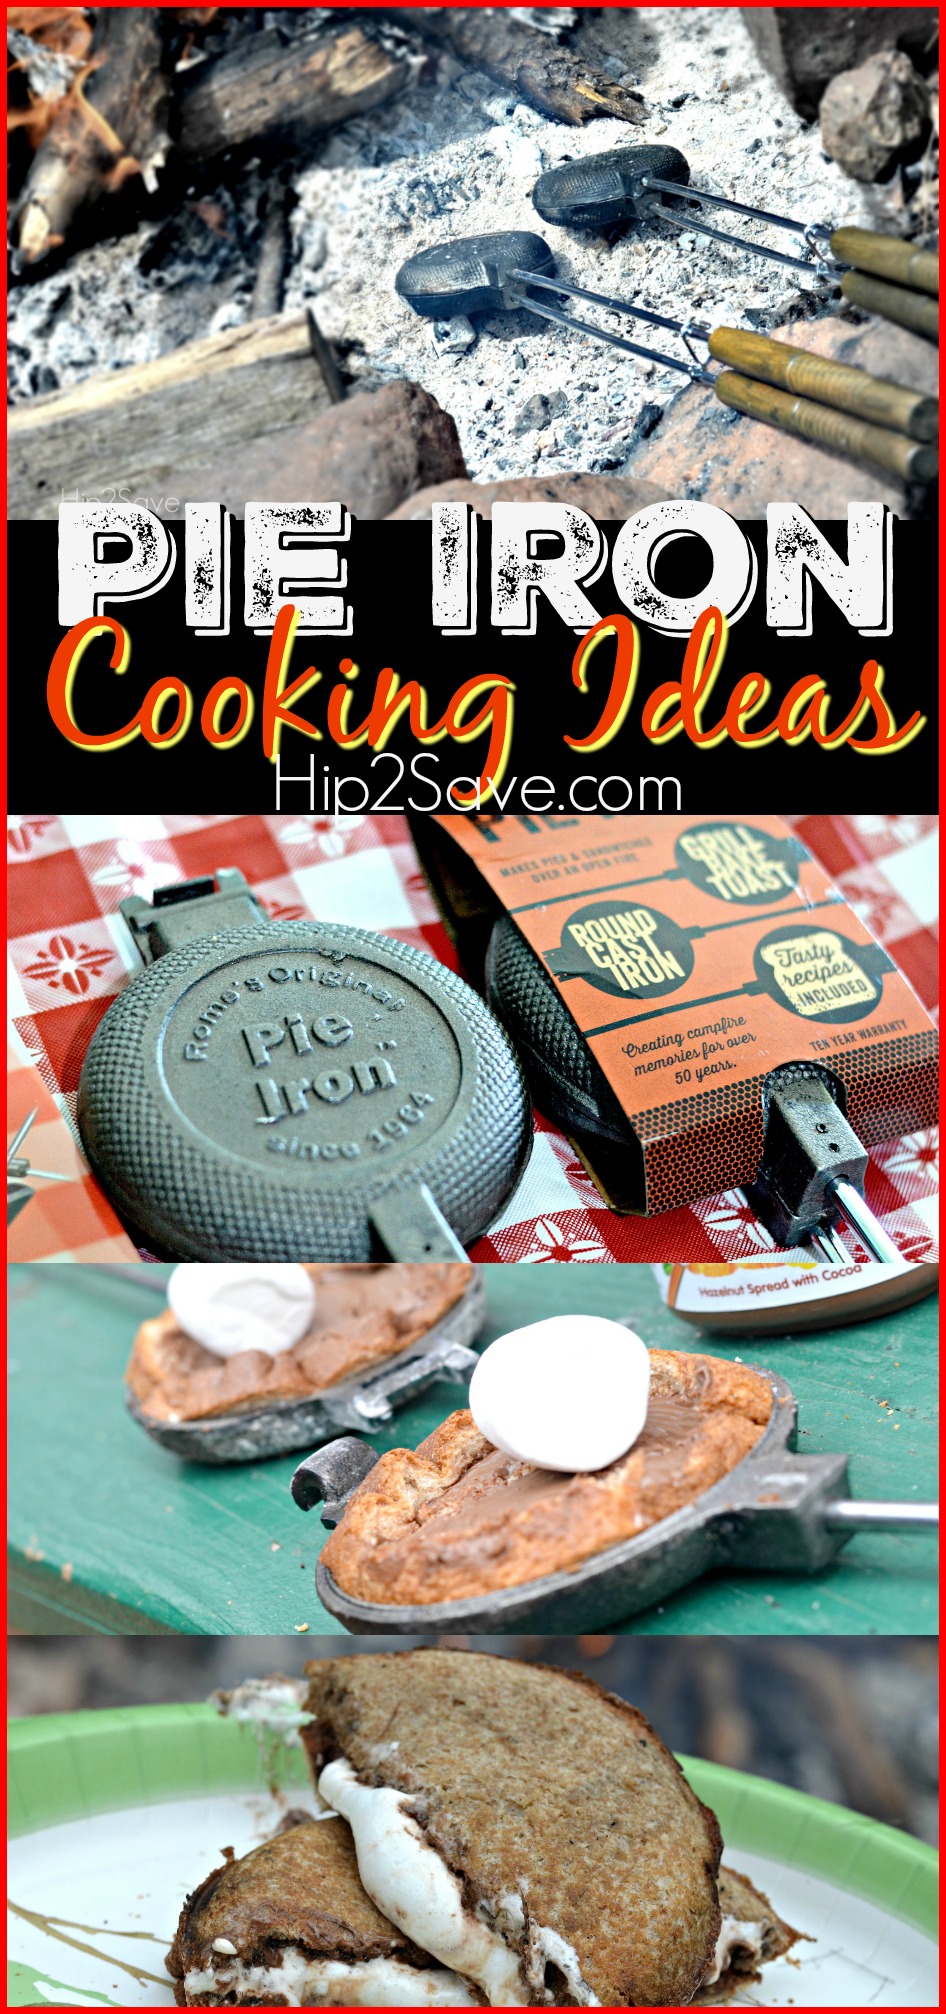 https://hip2save.com/wp-content/uploads/2016/04/pie-iron-cooking-ideas-by-hip2save-com.jpg